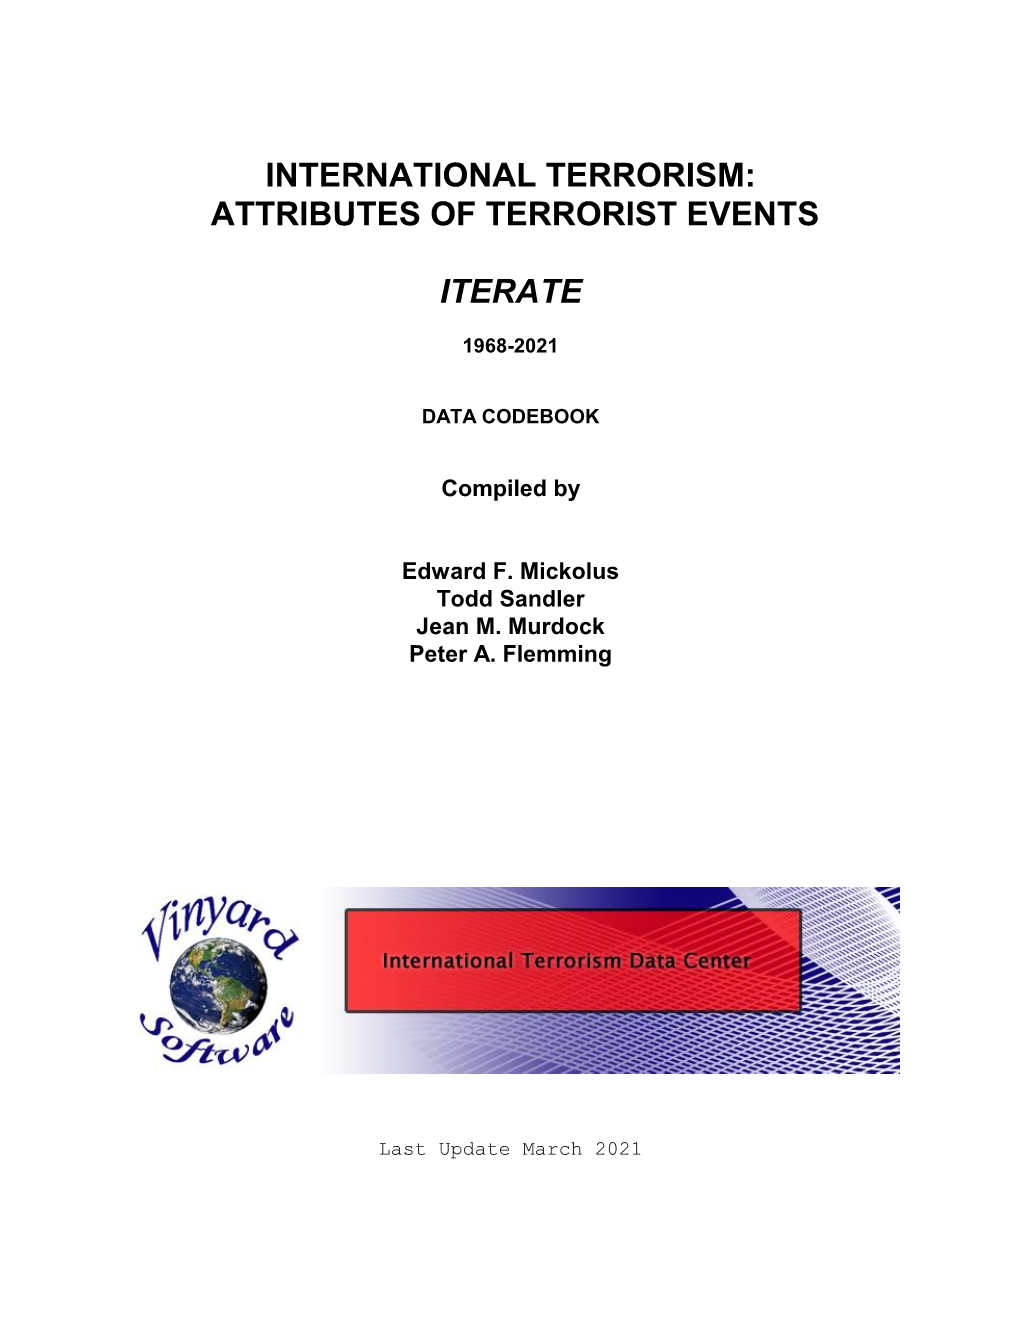 International Terrorism: Attributes of Terrorist Events Iterate